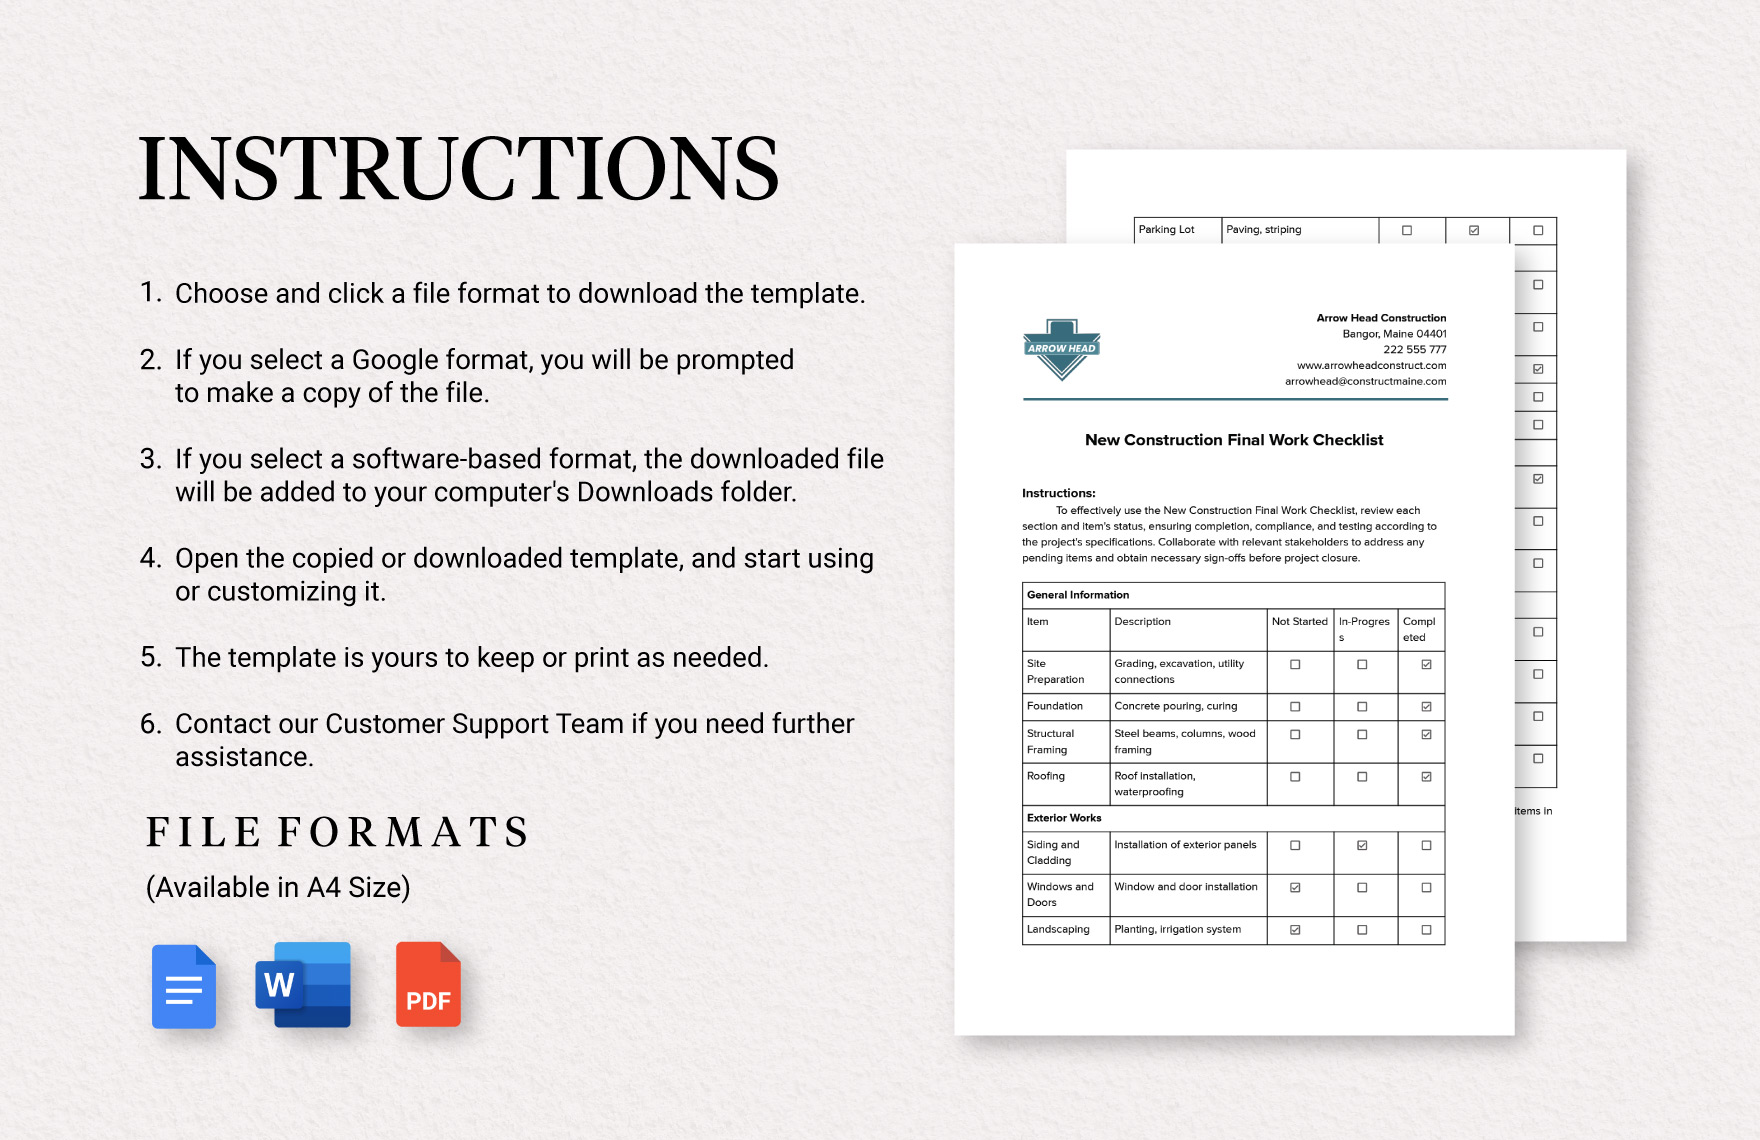 New Construction Final Work Checklist Template